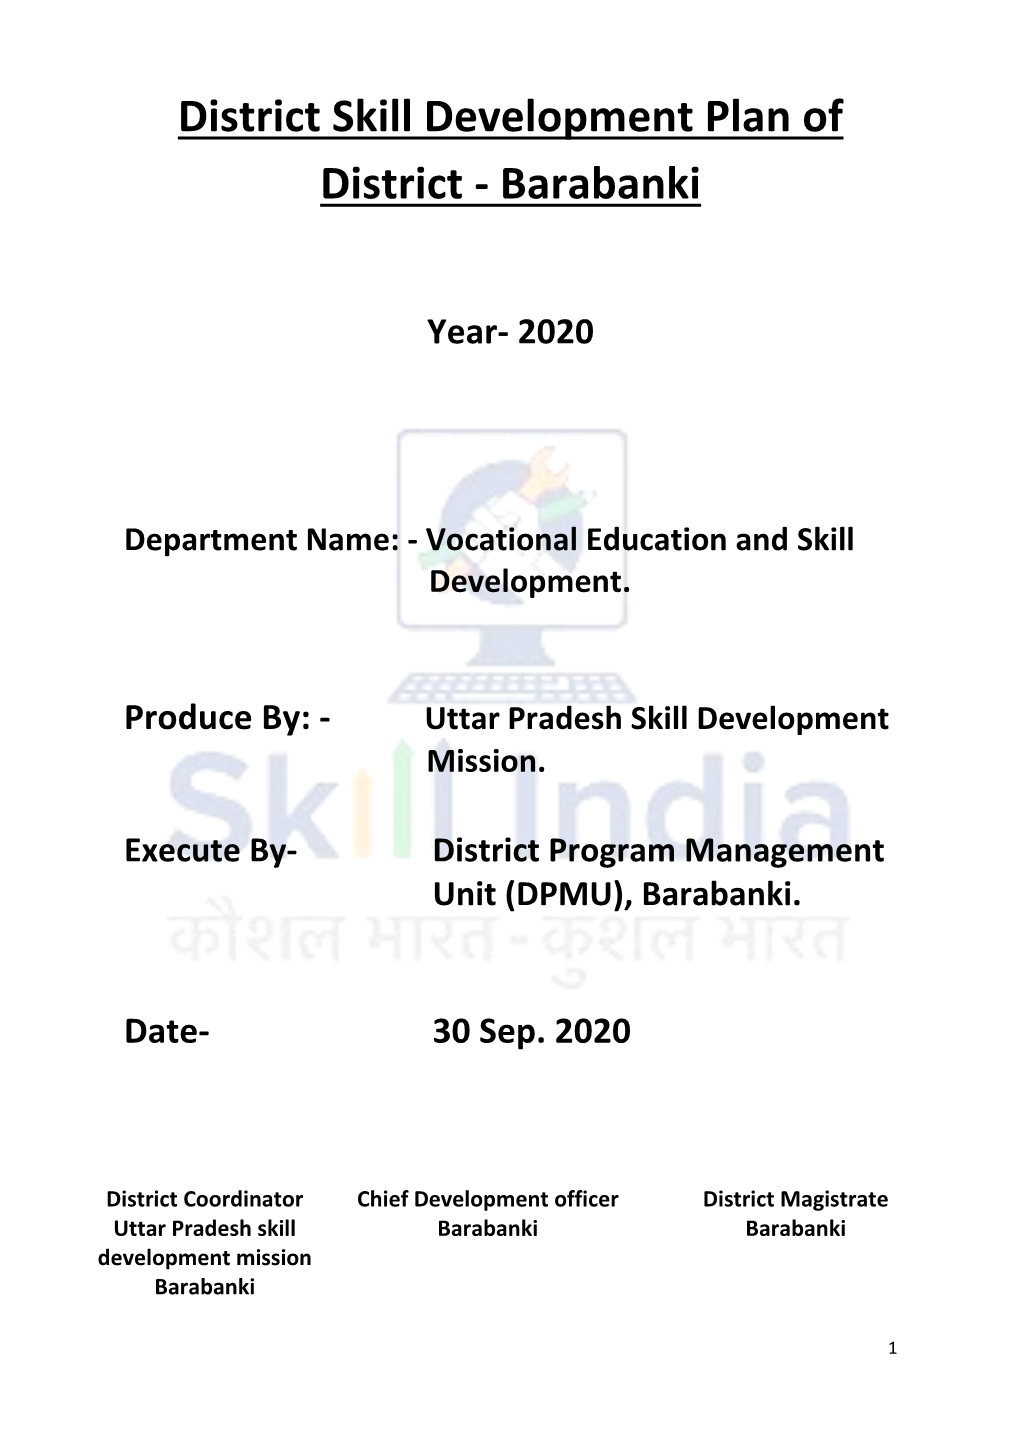 District Skill Development Plan of District - Barabanki